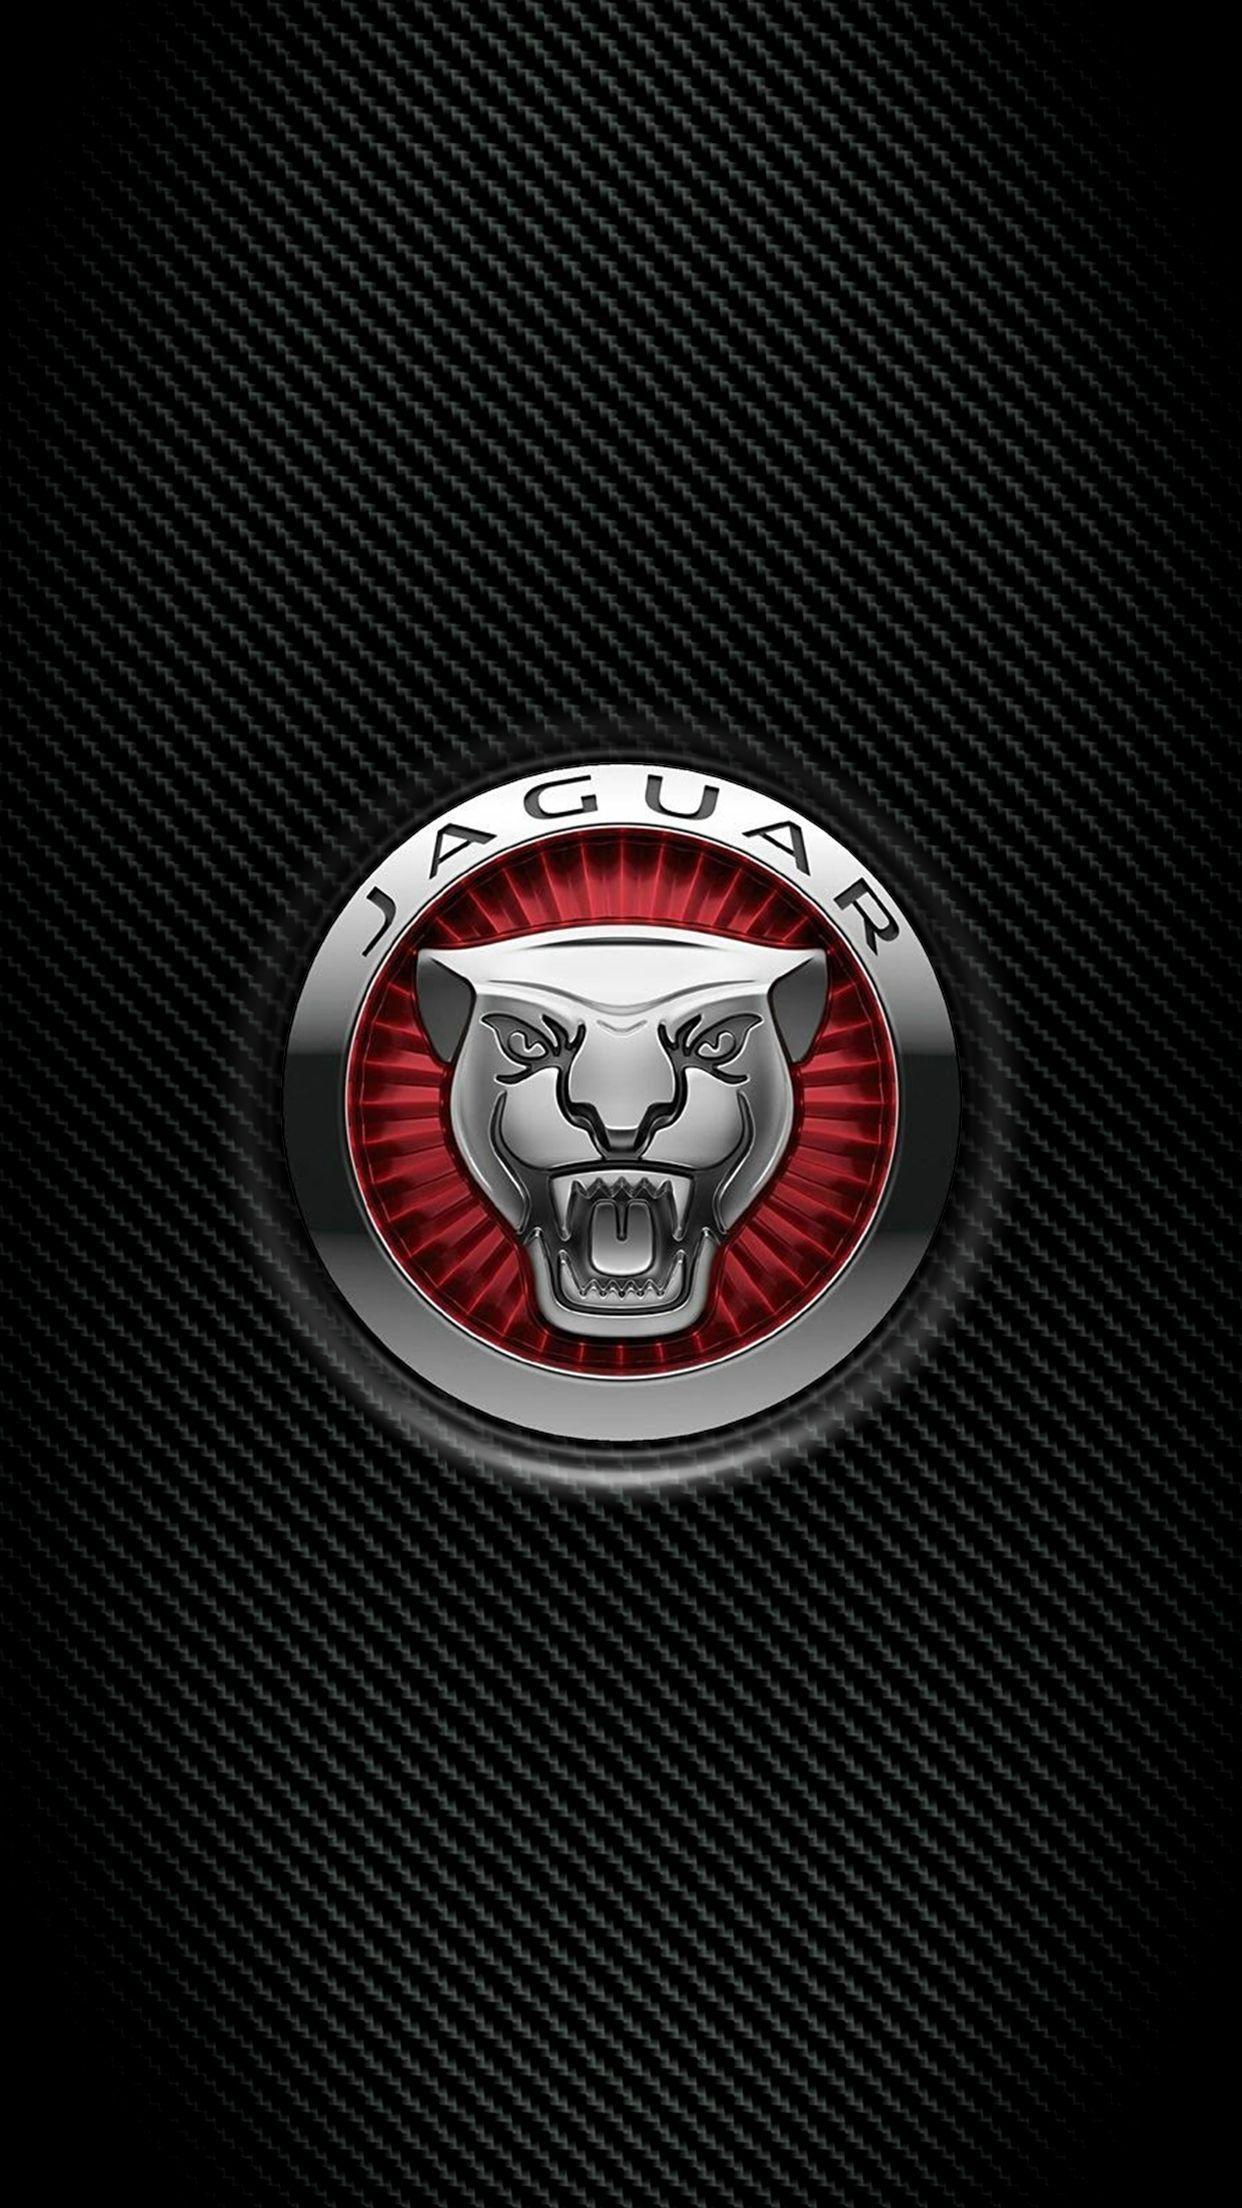 Jaguar Logo - Jaguar Logo wallpaper/screen saver for smartphone | Jaguar / Land ...